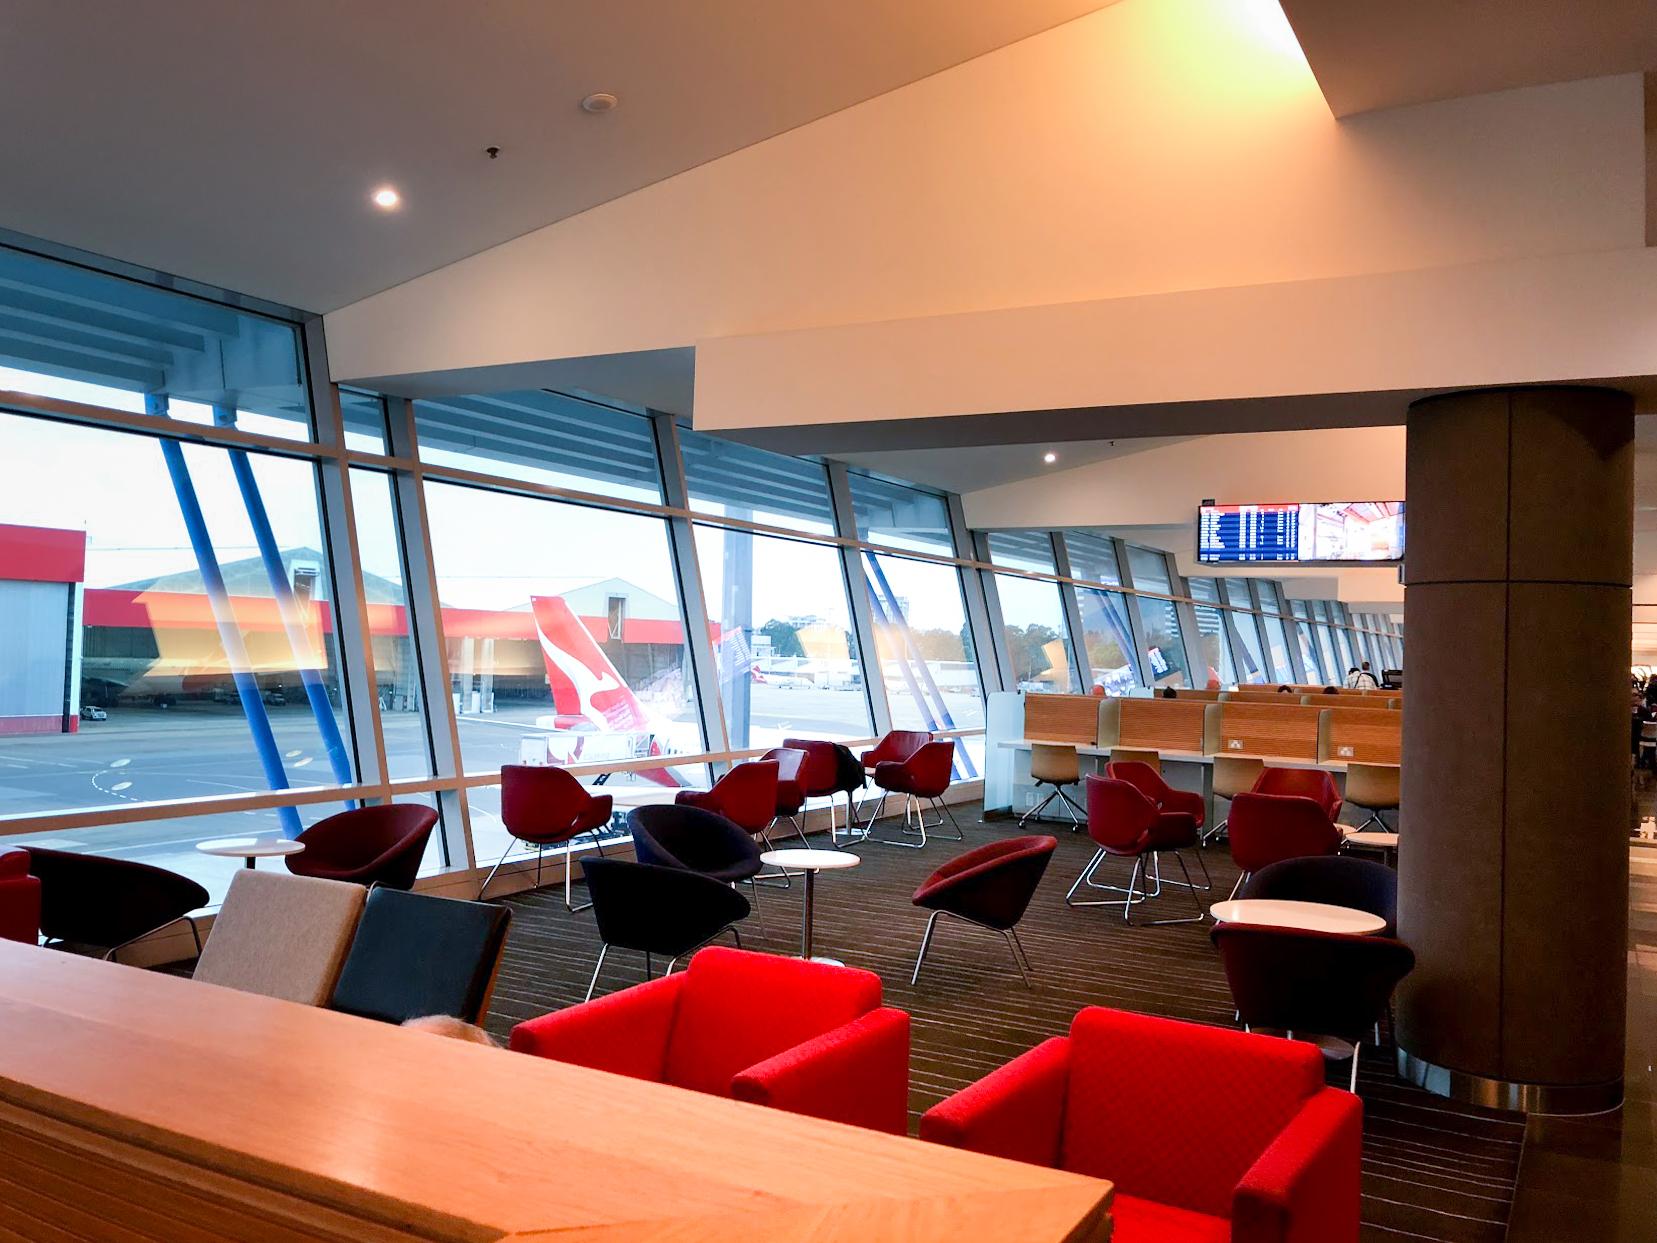 Qantas Club Sydney seating area by the window